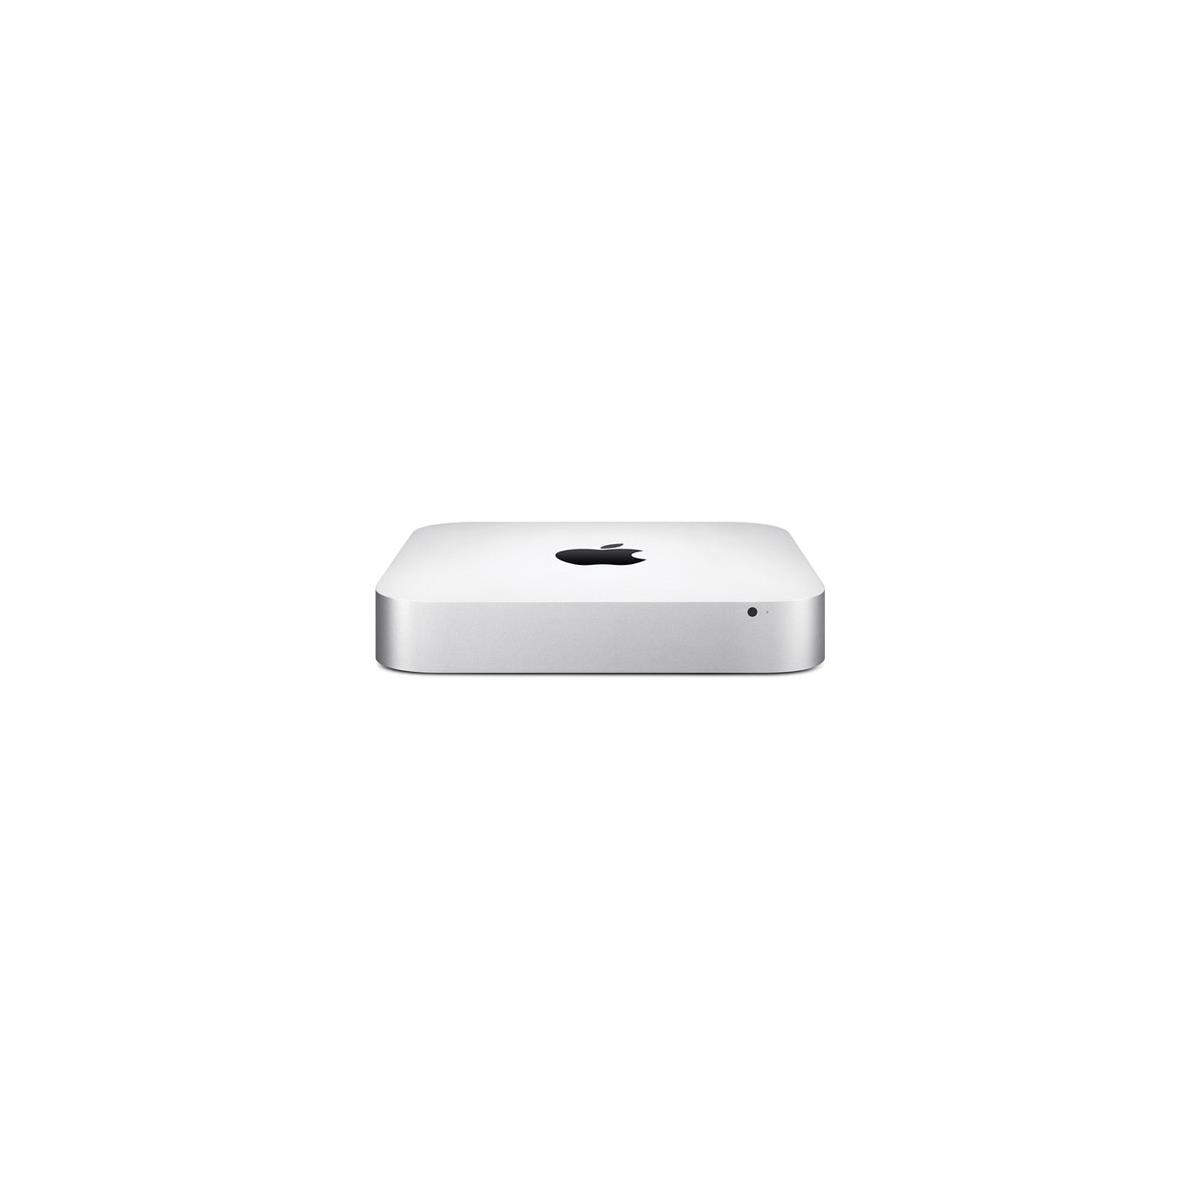 Image of Apple Mac Mini Desktop PC